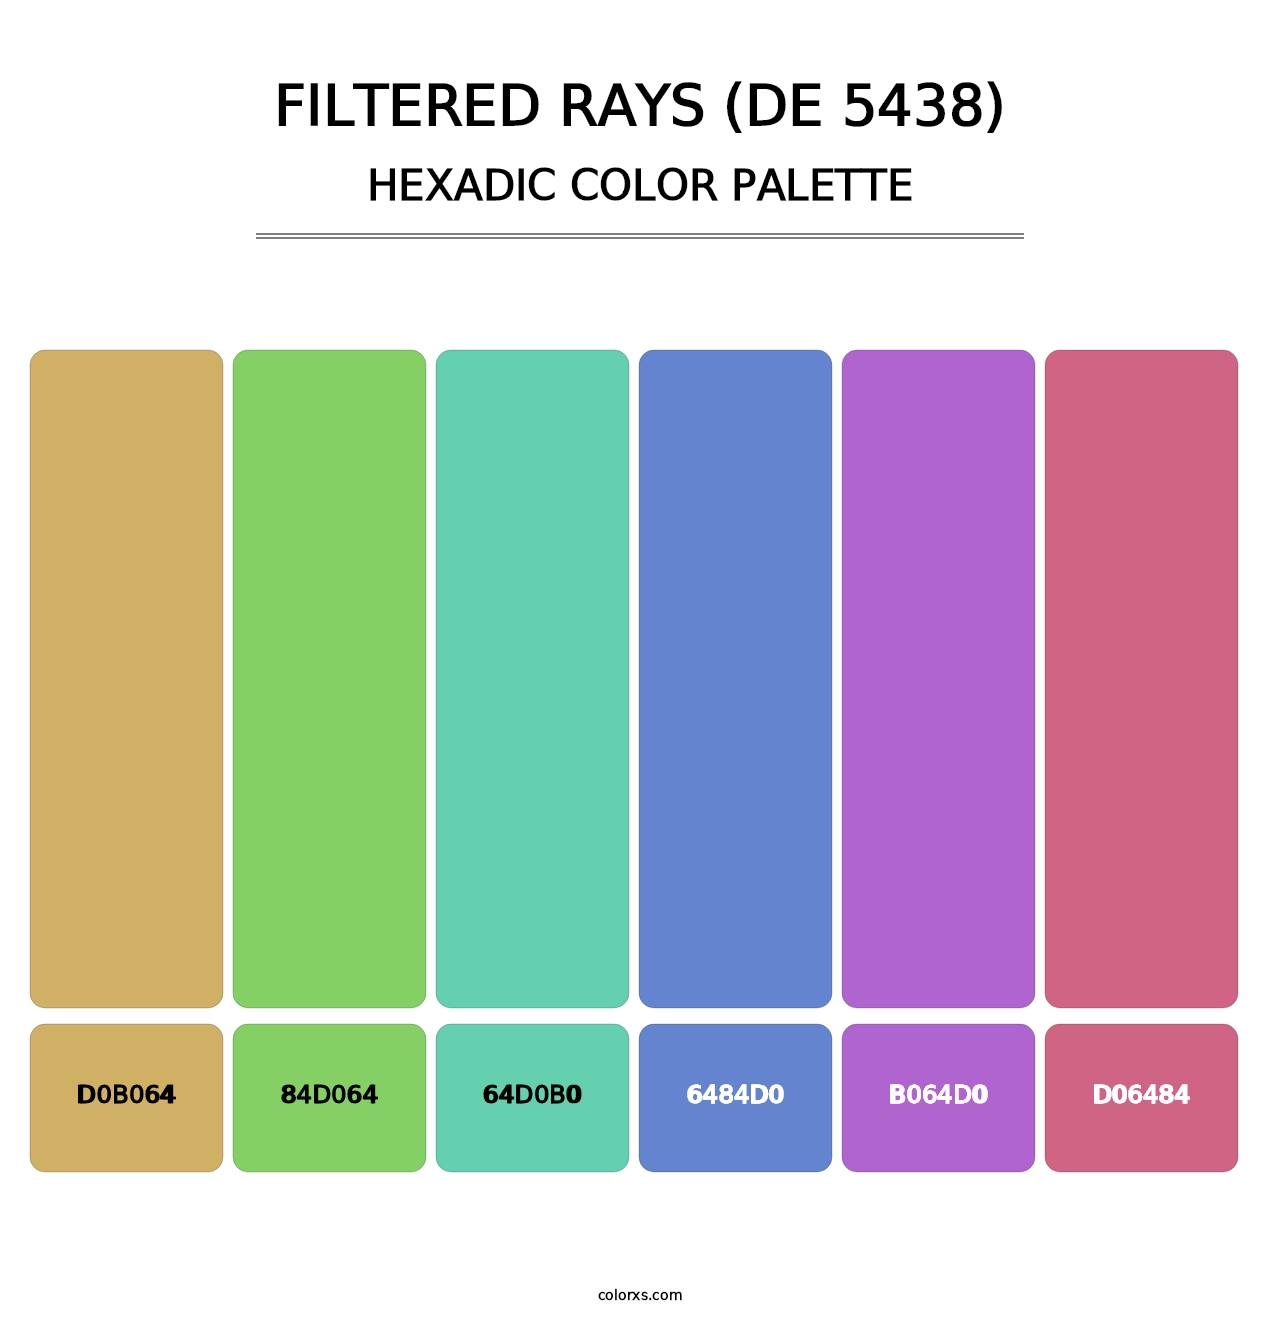 Filtered Rays (DE 5438) - Hexadic Color Palette